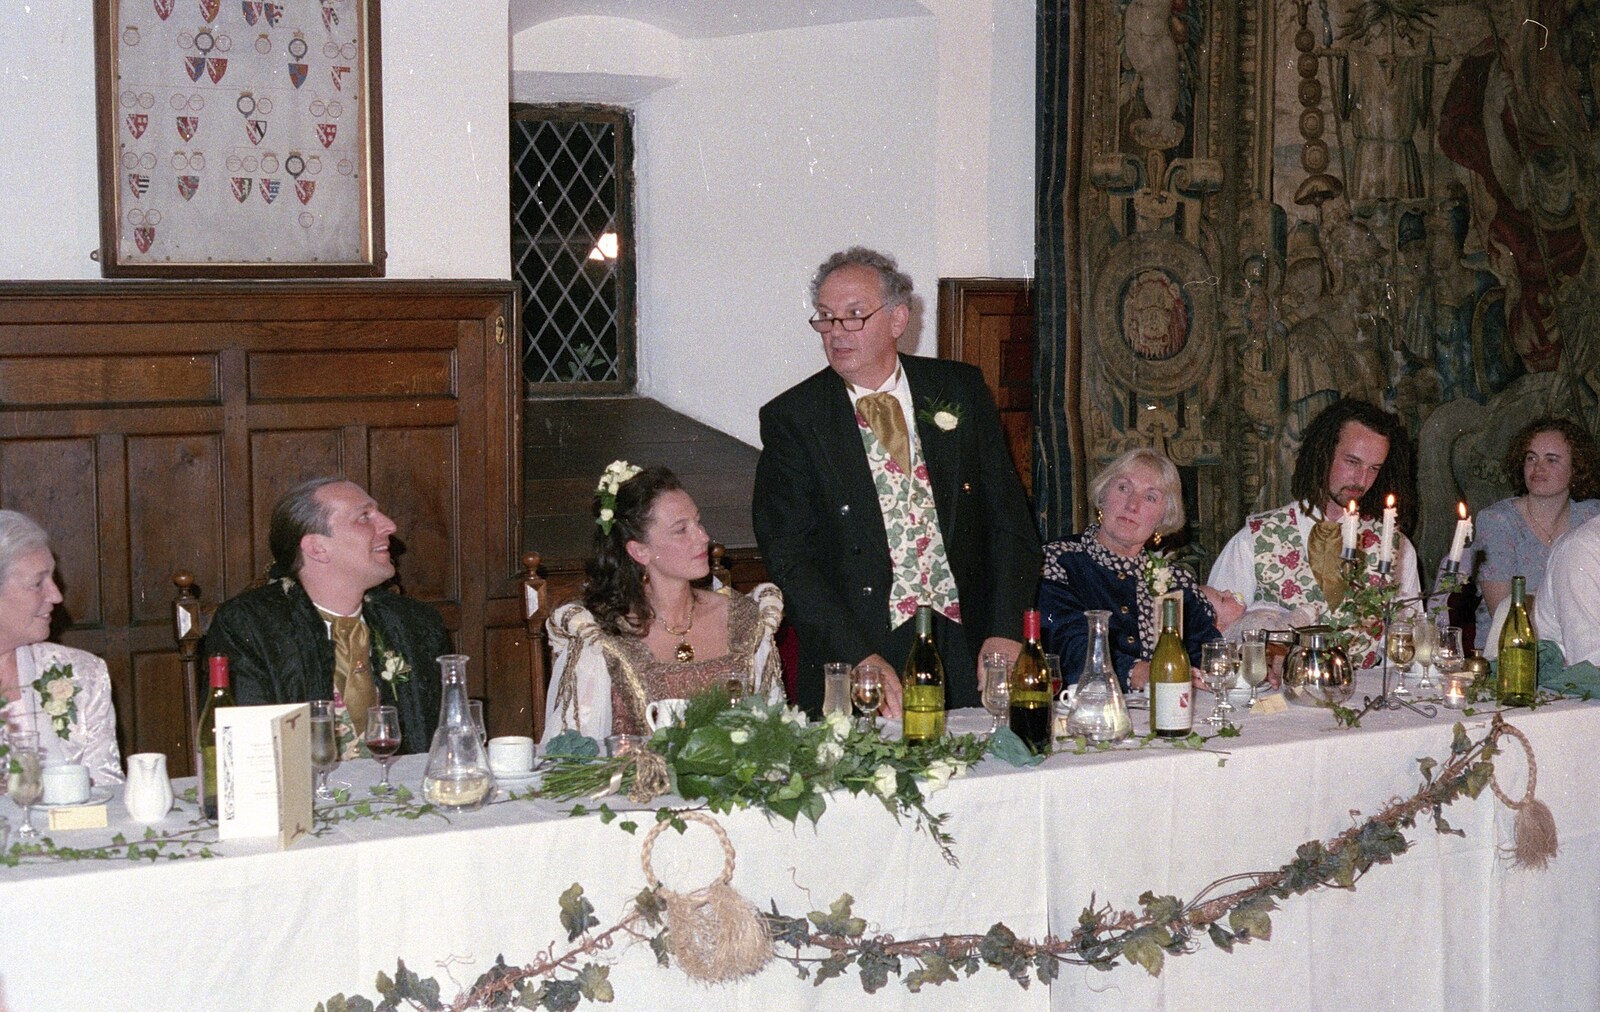 Stuart and Sarah's CISU Wedding, Naworth Castle, Brampton, Cumbria - 21st September 1996: The bride's father does a speech